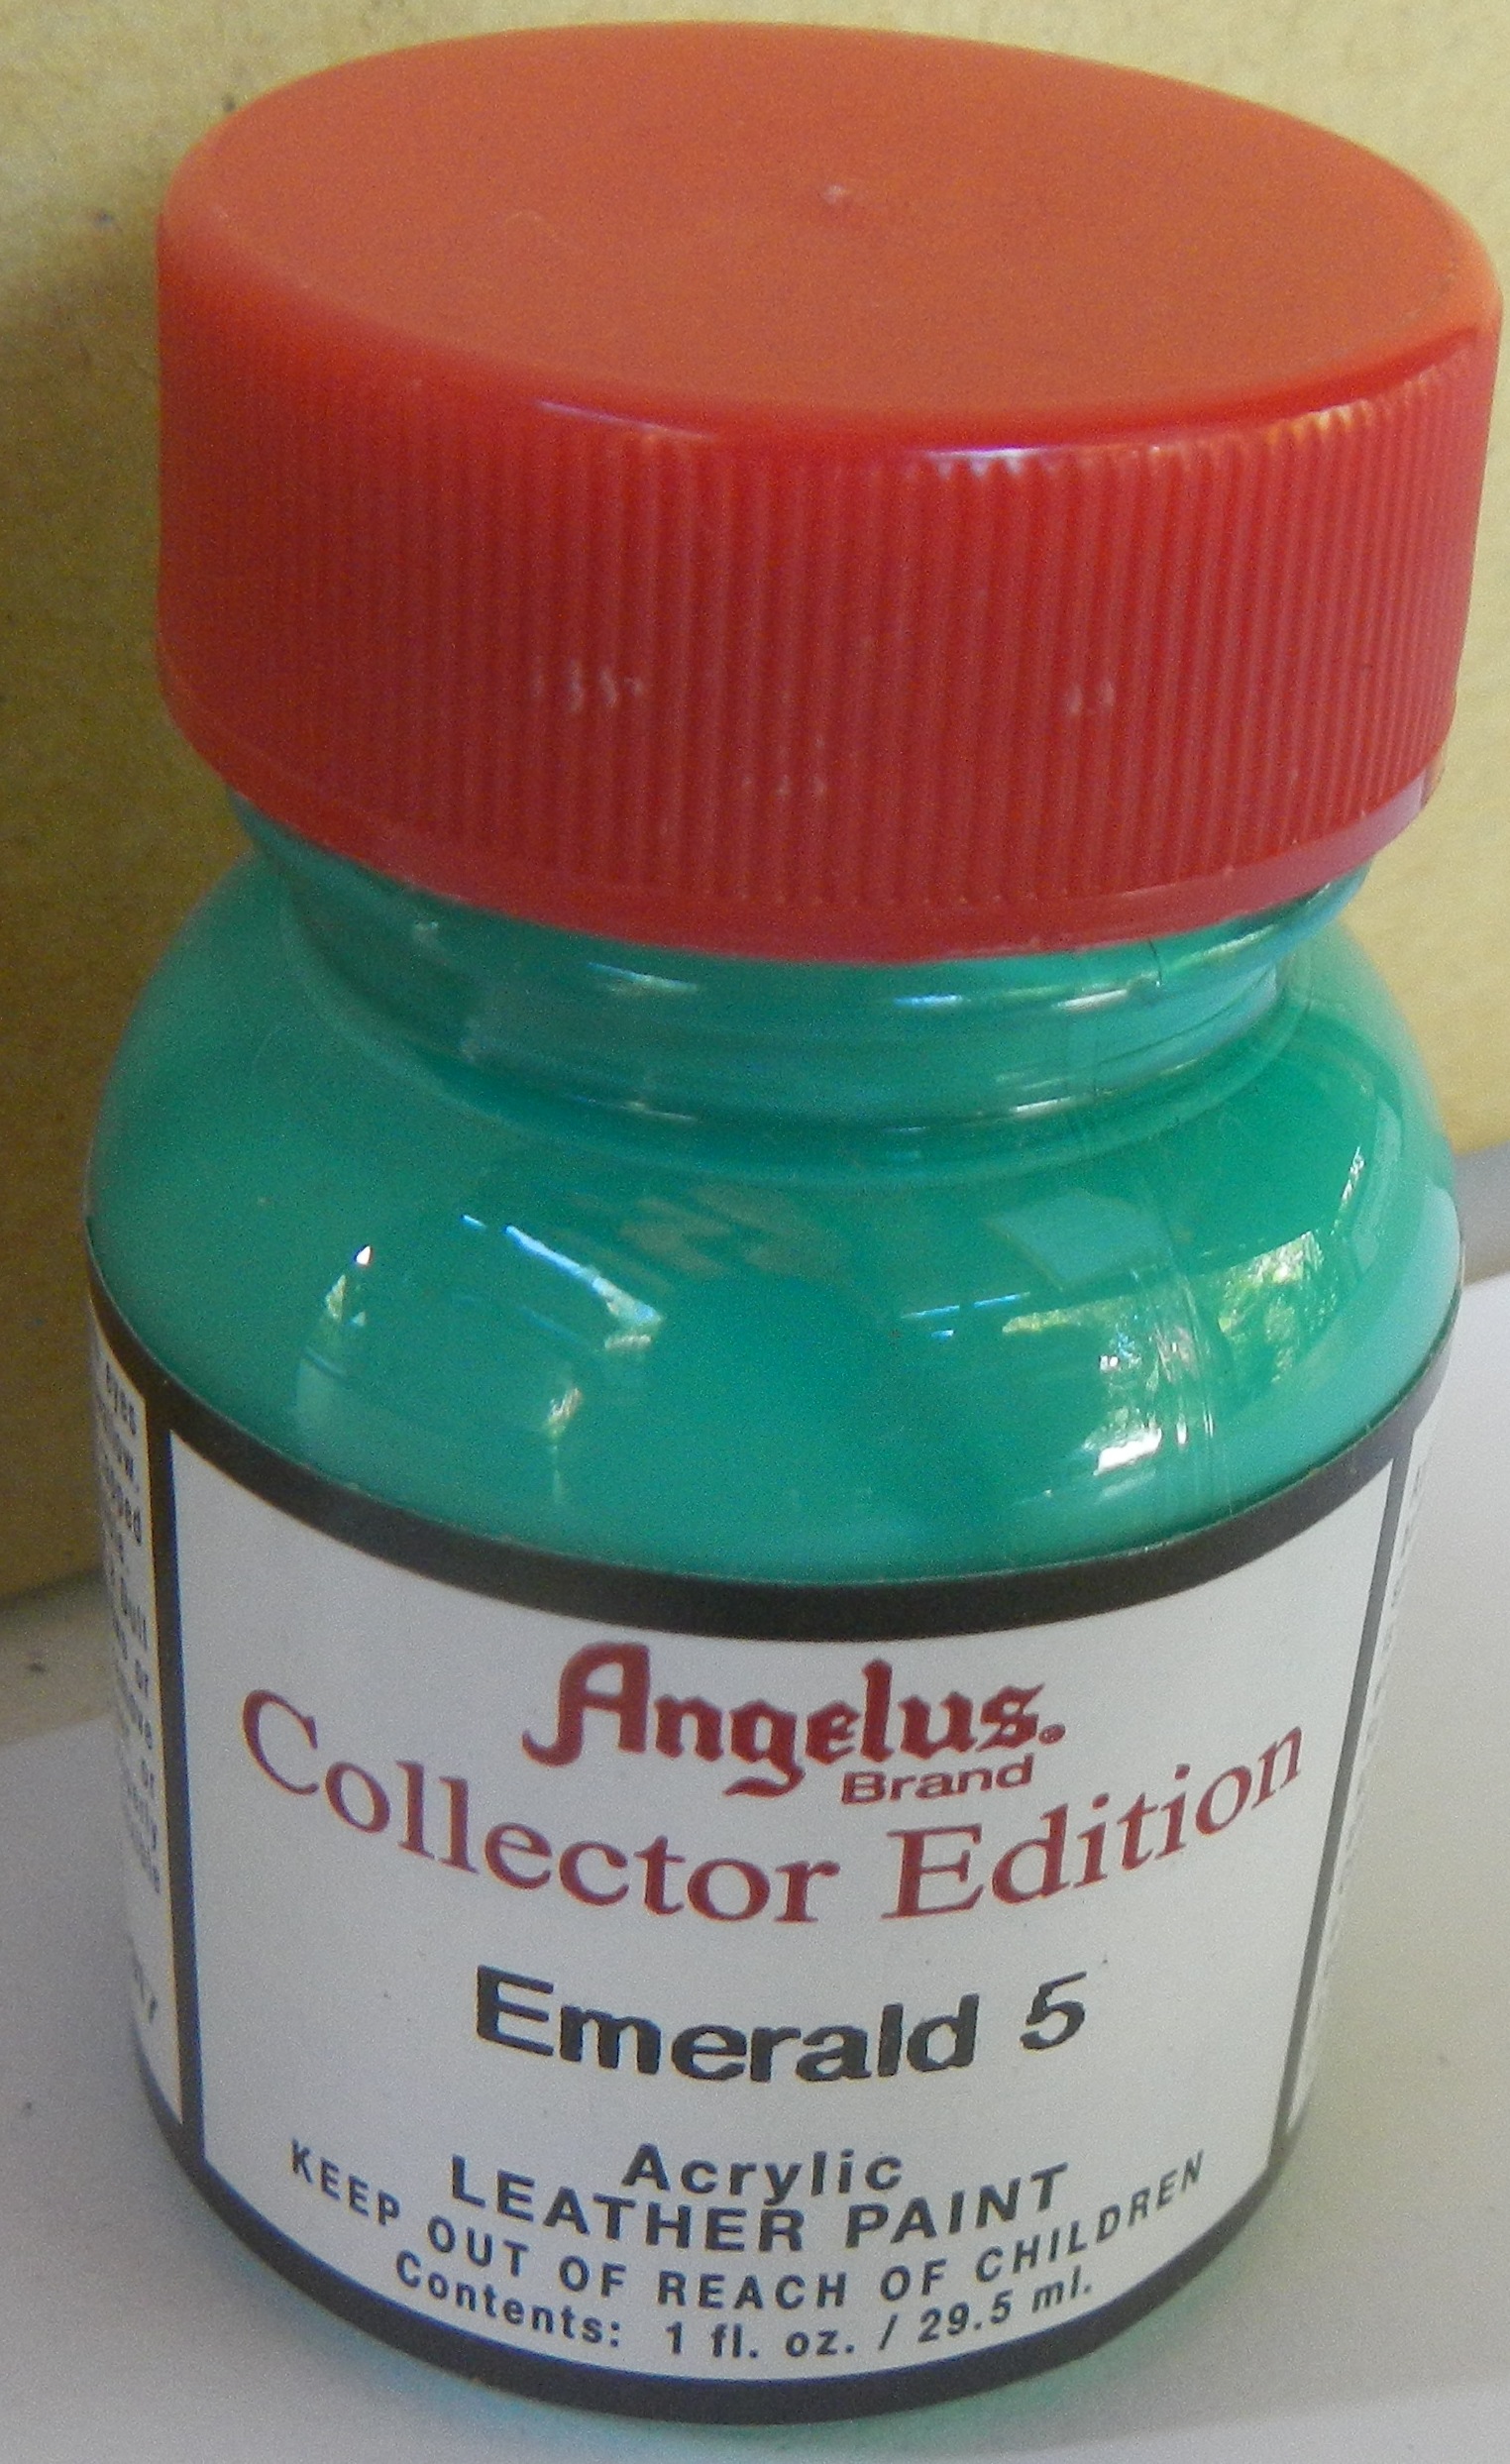 Angelus Emerald 5 Collector Edition